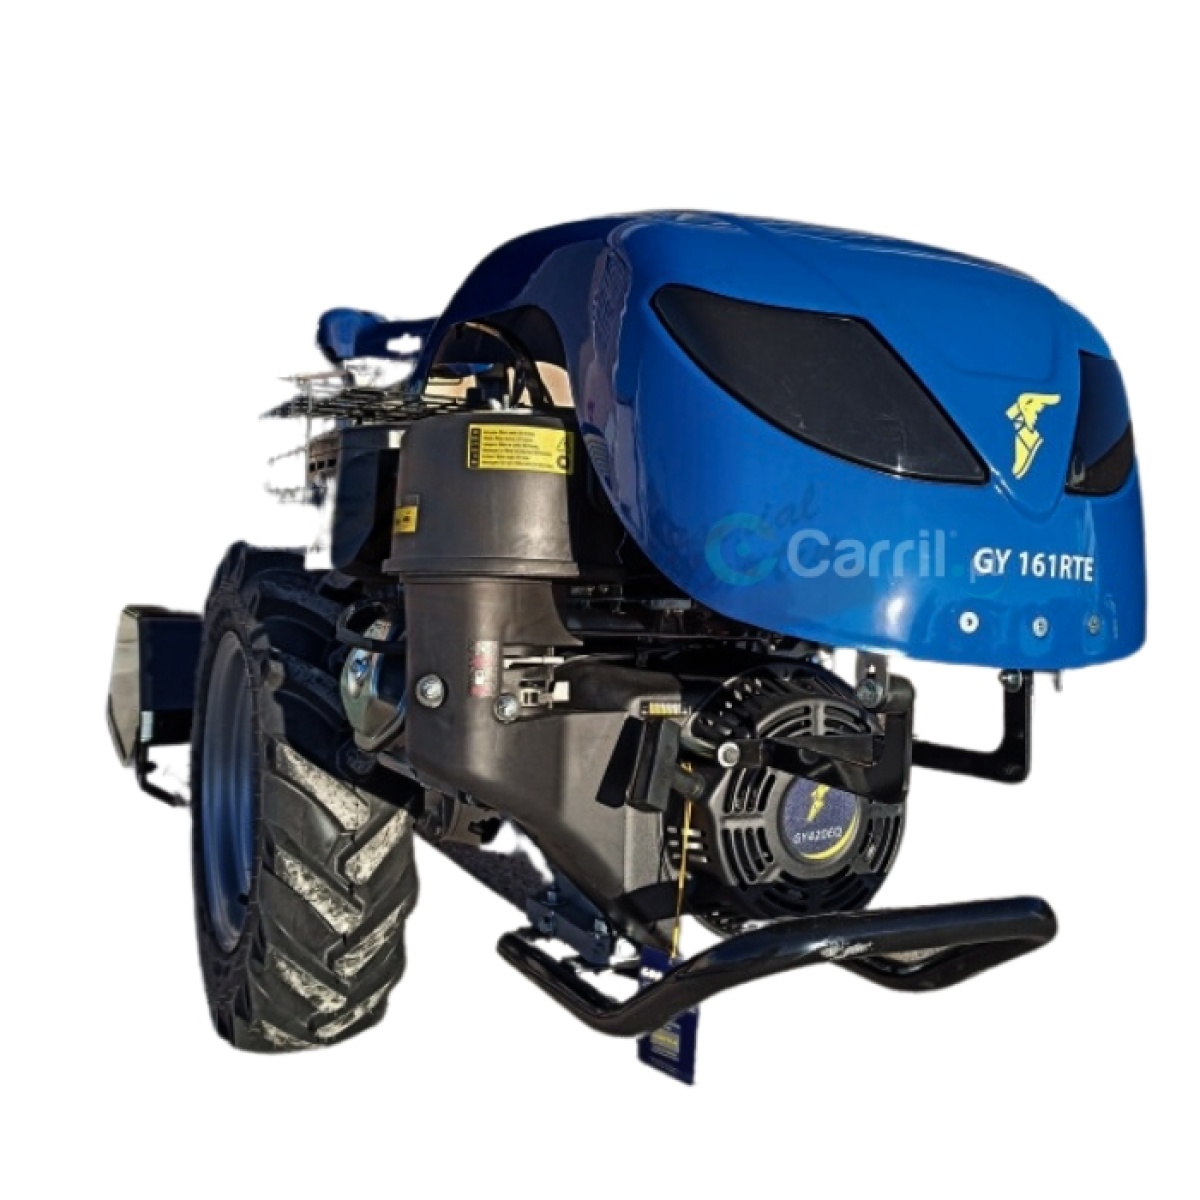 Motocultor Gasolina con Arranque Eléctrico - Goodyear GY161RTE